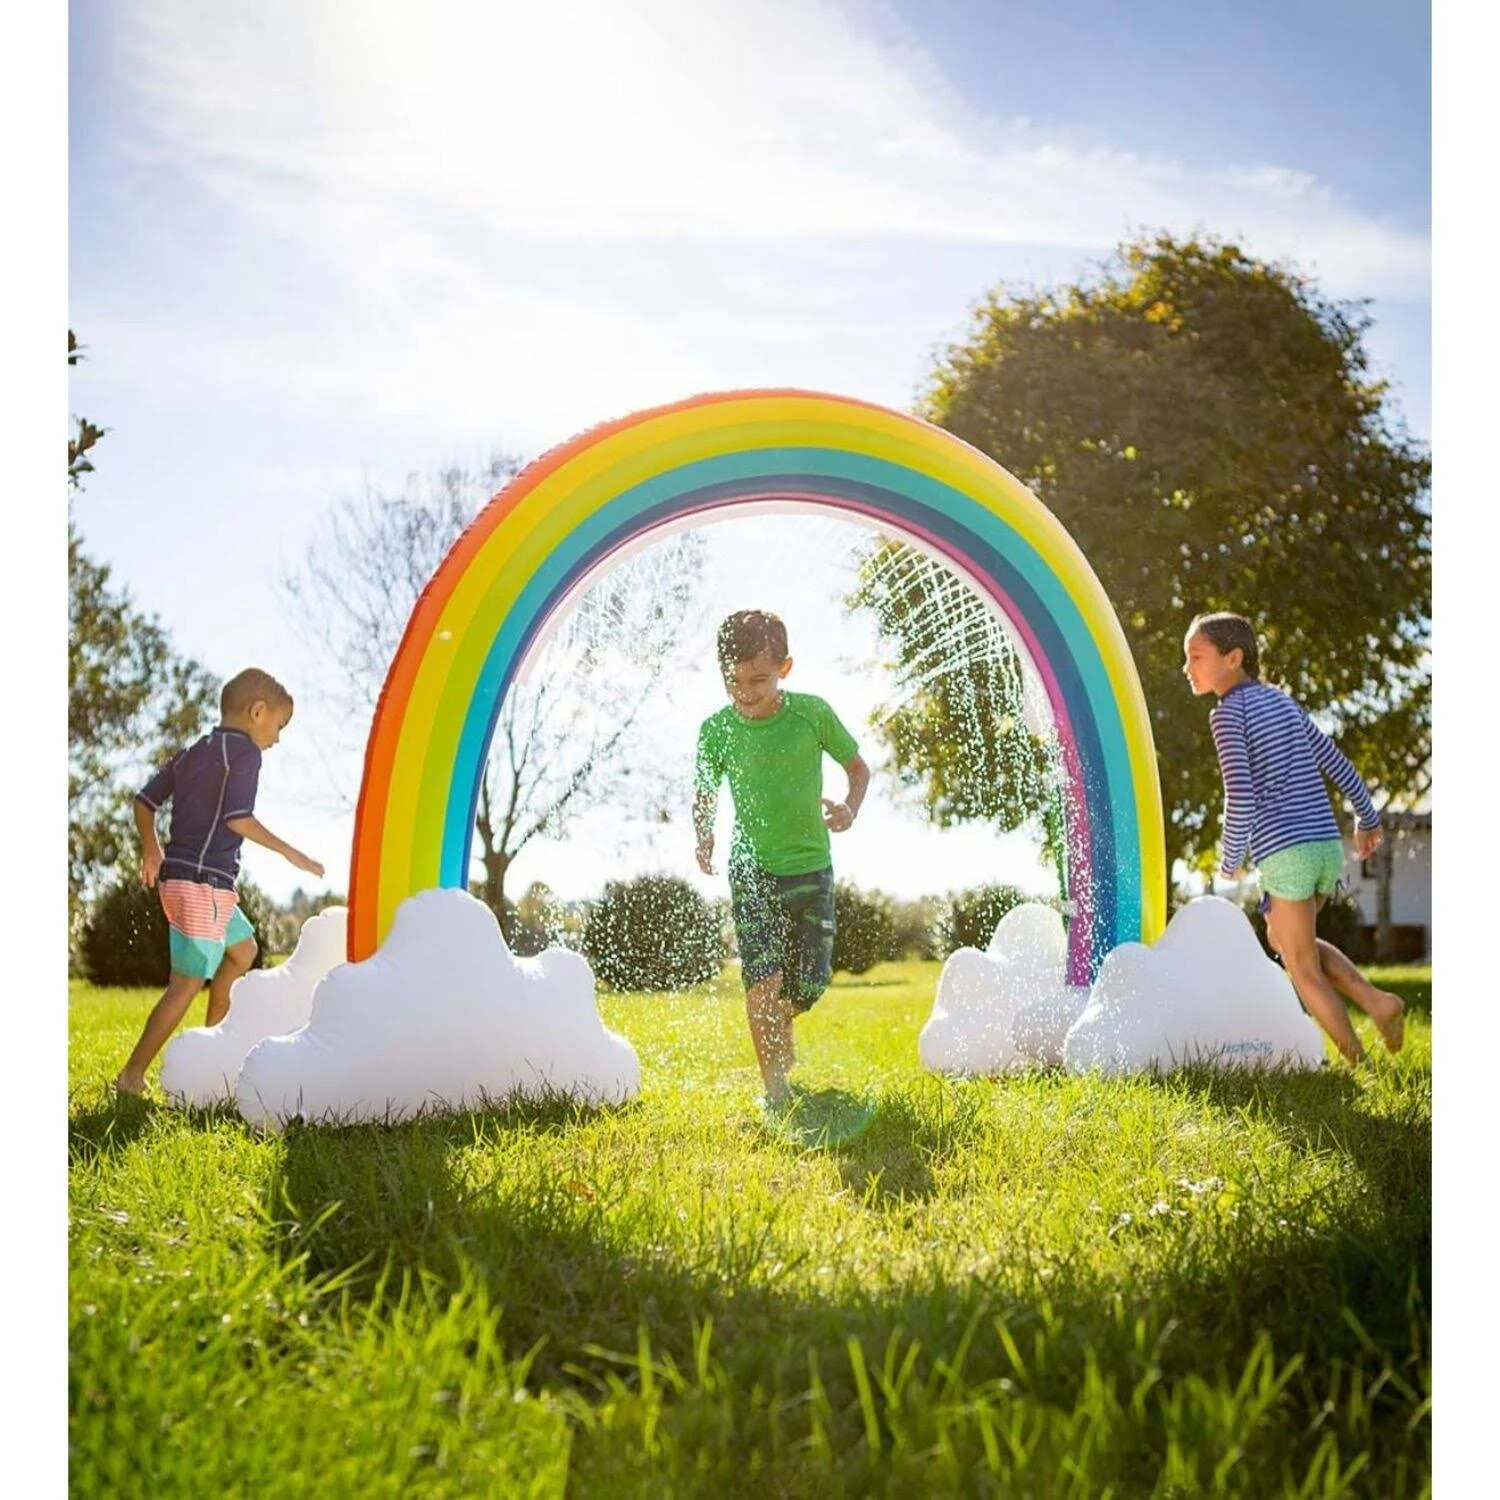 Outdoor Rainbow Sprinkler Super Toddler Water Toys for Children Infants for sale online 